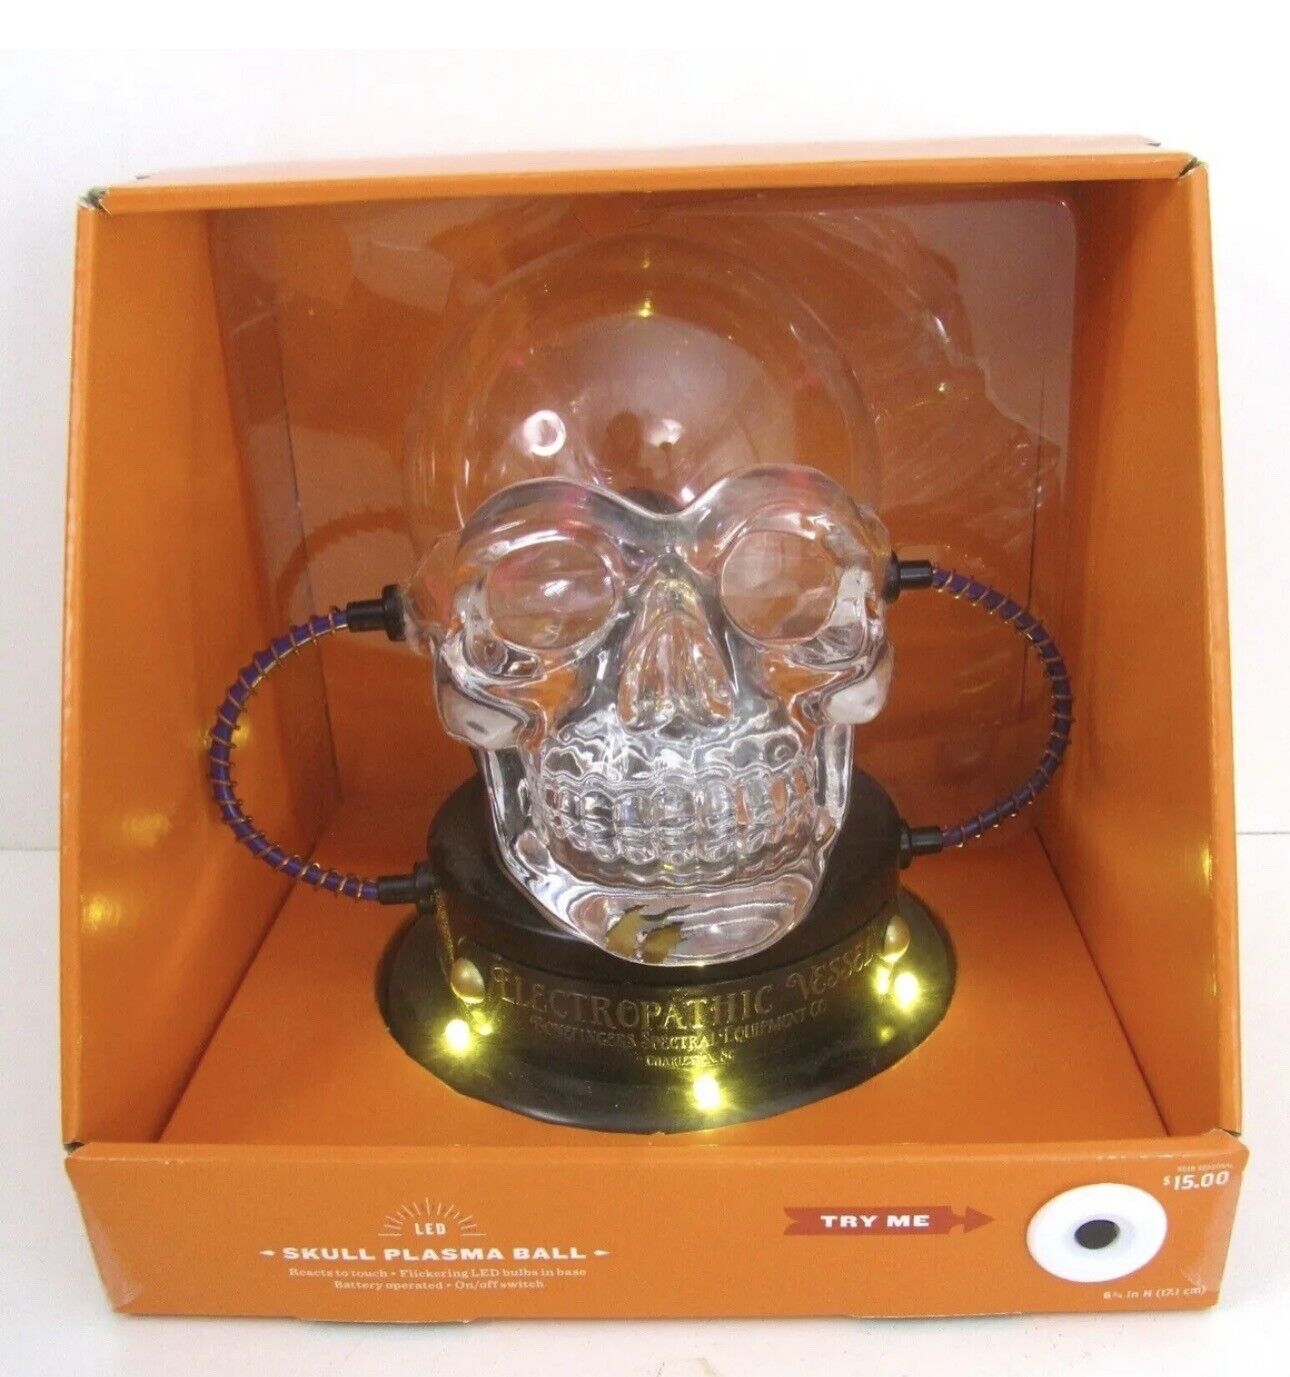 Hyde & EEK Halloween Target LED Skull Plasma Ball Spooky Decor Electrophatic